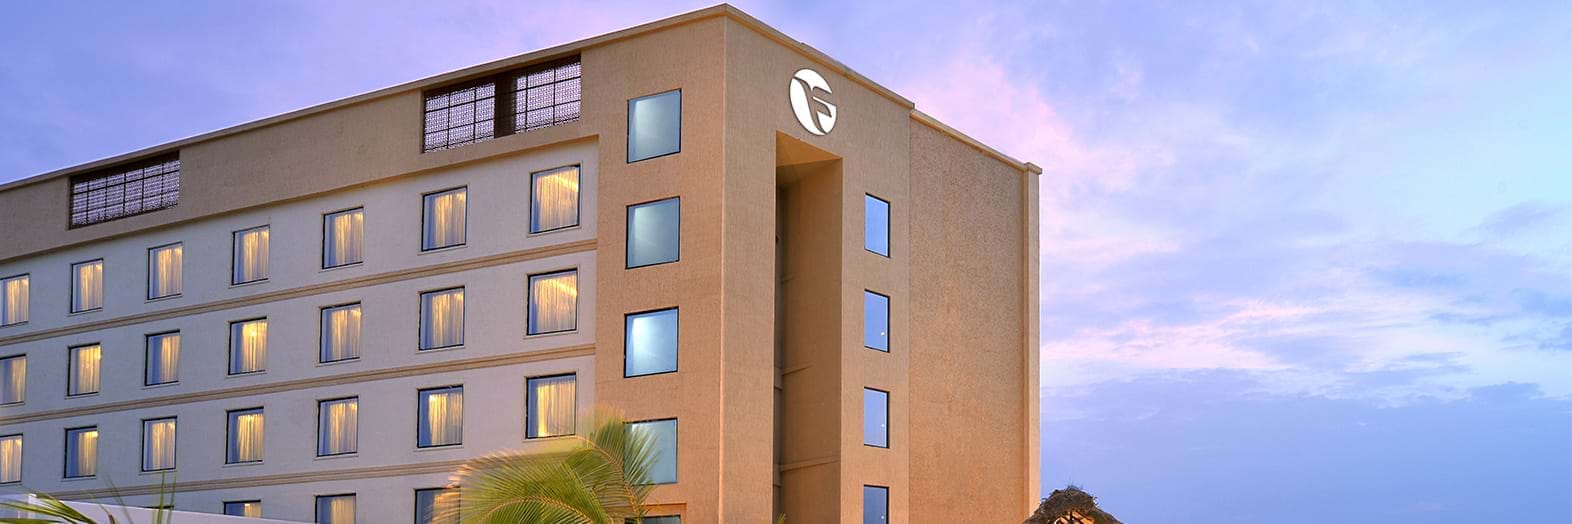 Hotels in Tirupati - Fortune Select Grand Ridge